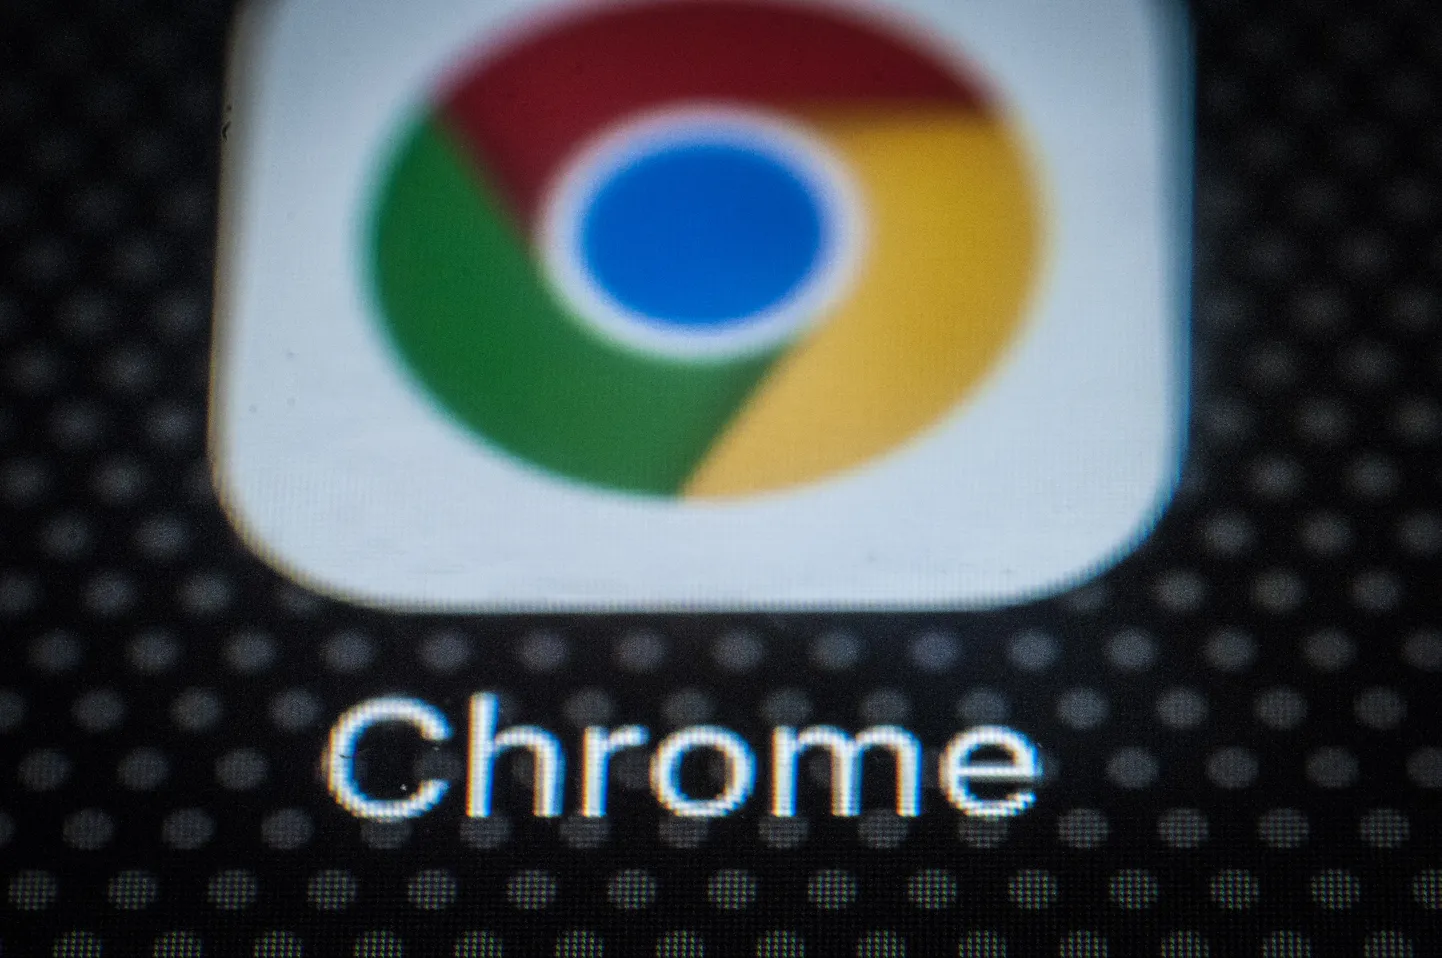 Логотип Google Chrome. Иллюстративное фото.